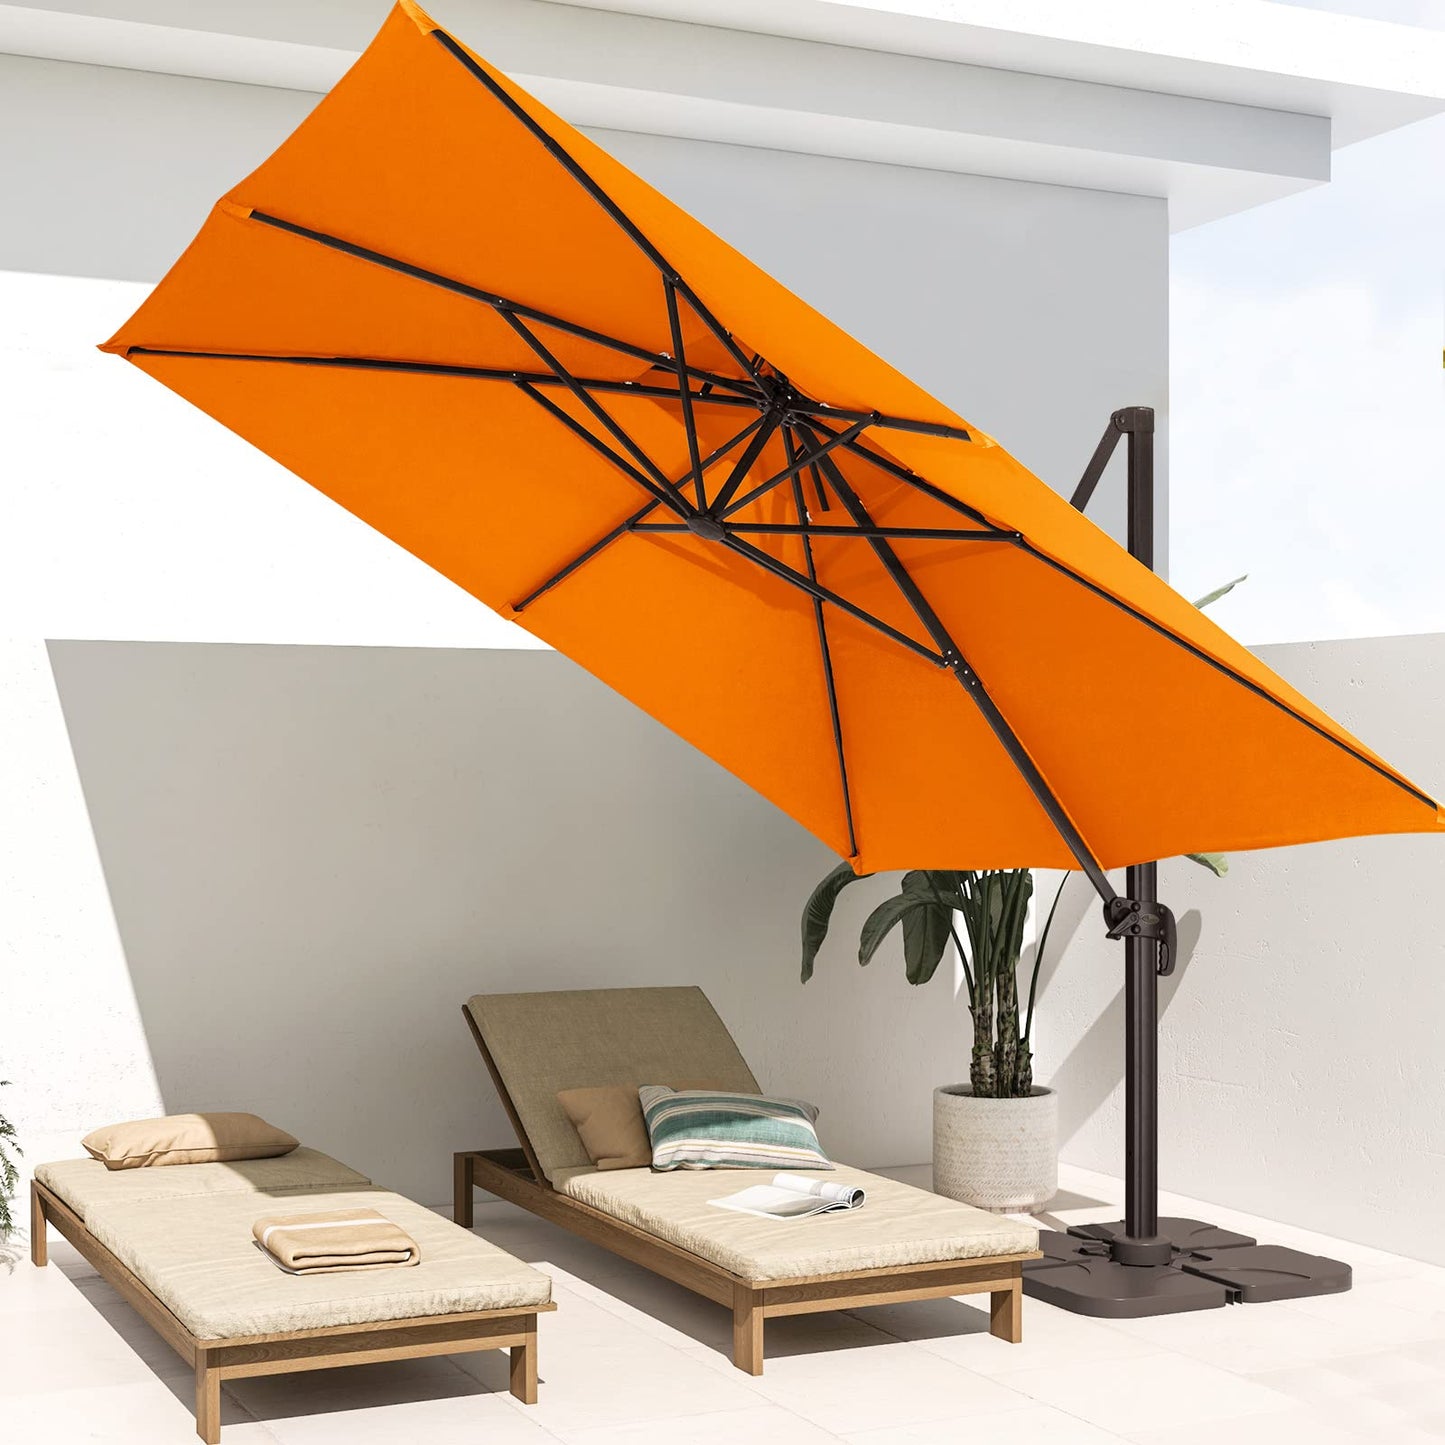 Square Cantilever Patio Umbrella 11FT Coral Orange